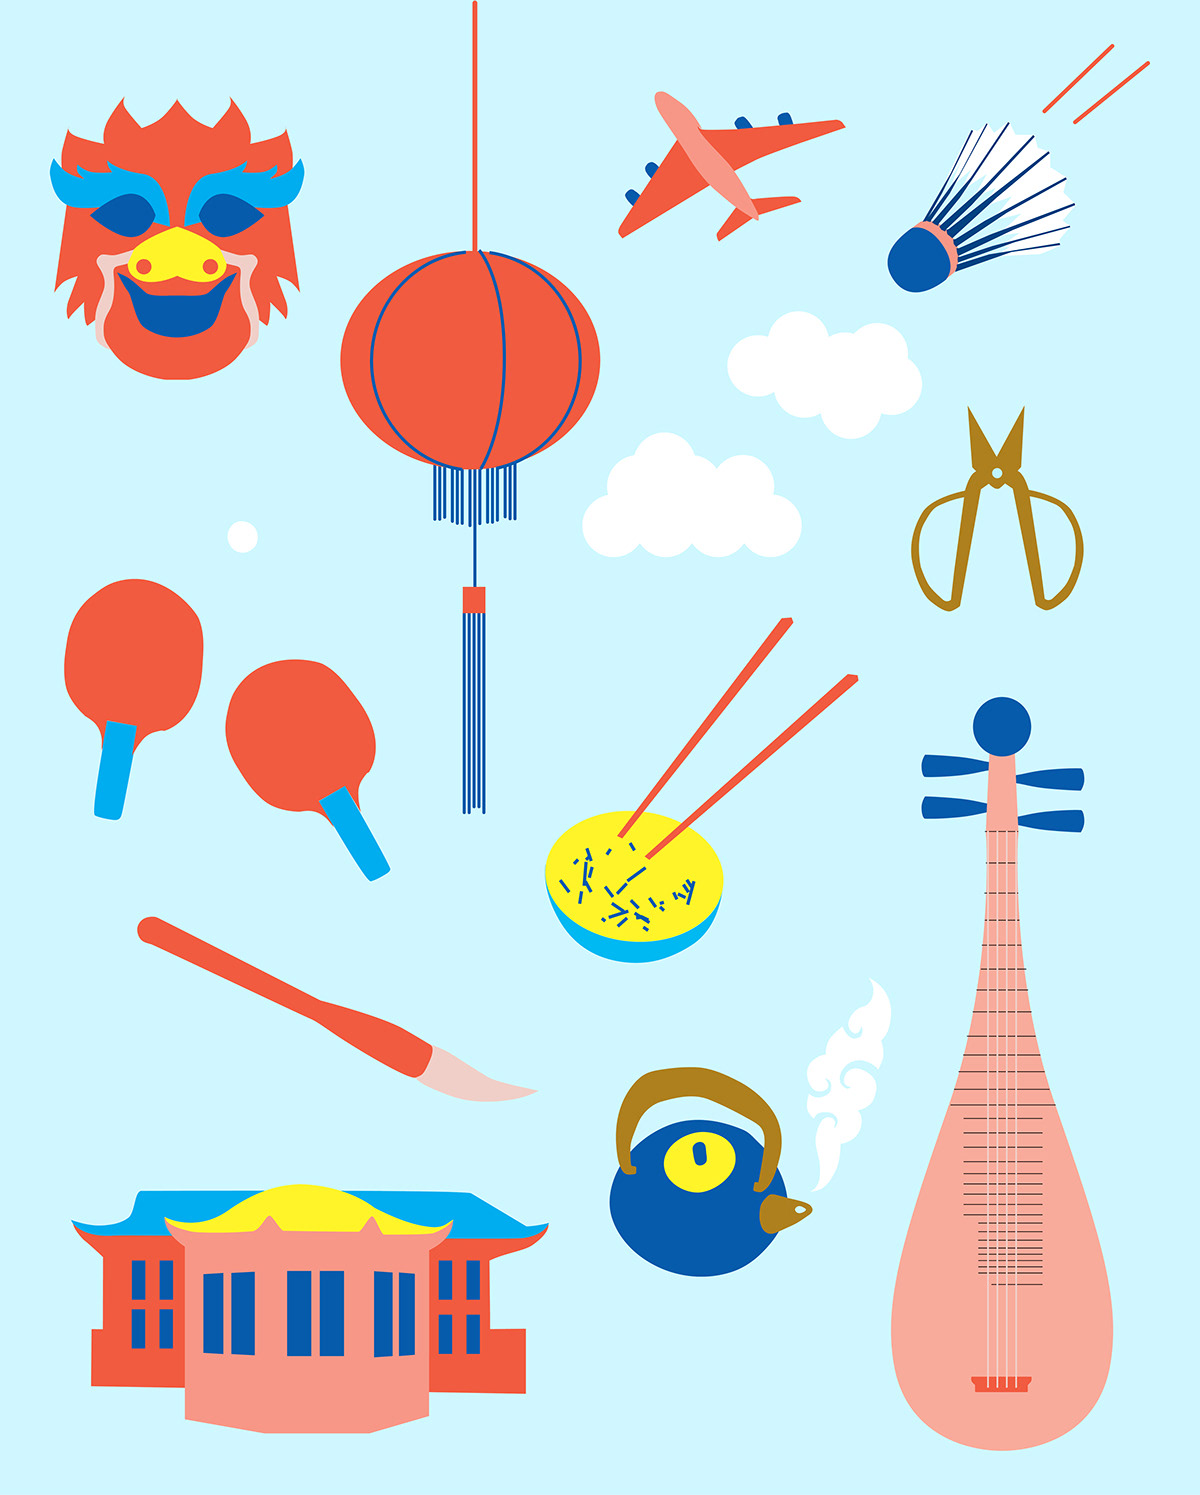 Veranstaltung fest ILLUSTRATIONEN china Konfuzius-Institut Grafikdesign blau Gelb